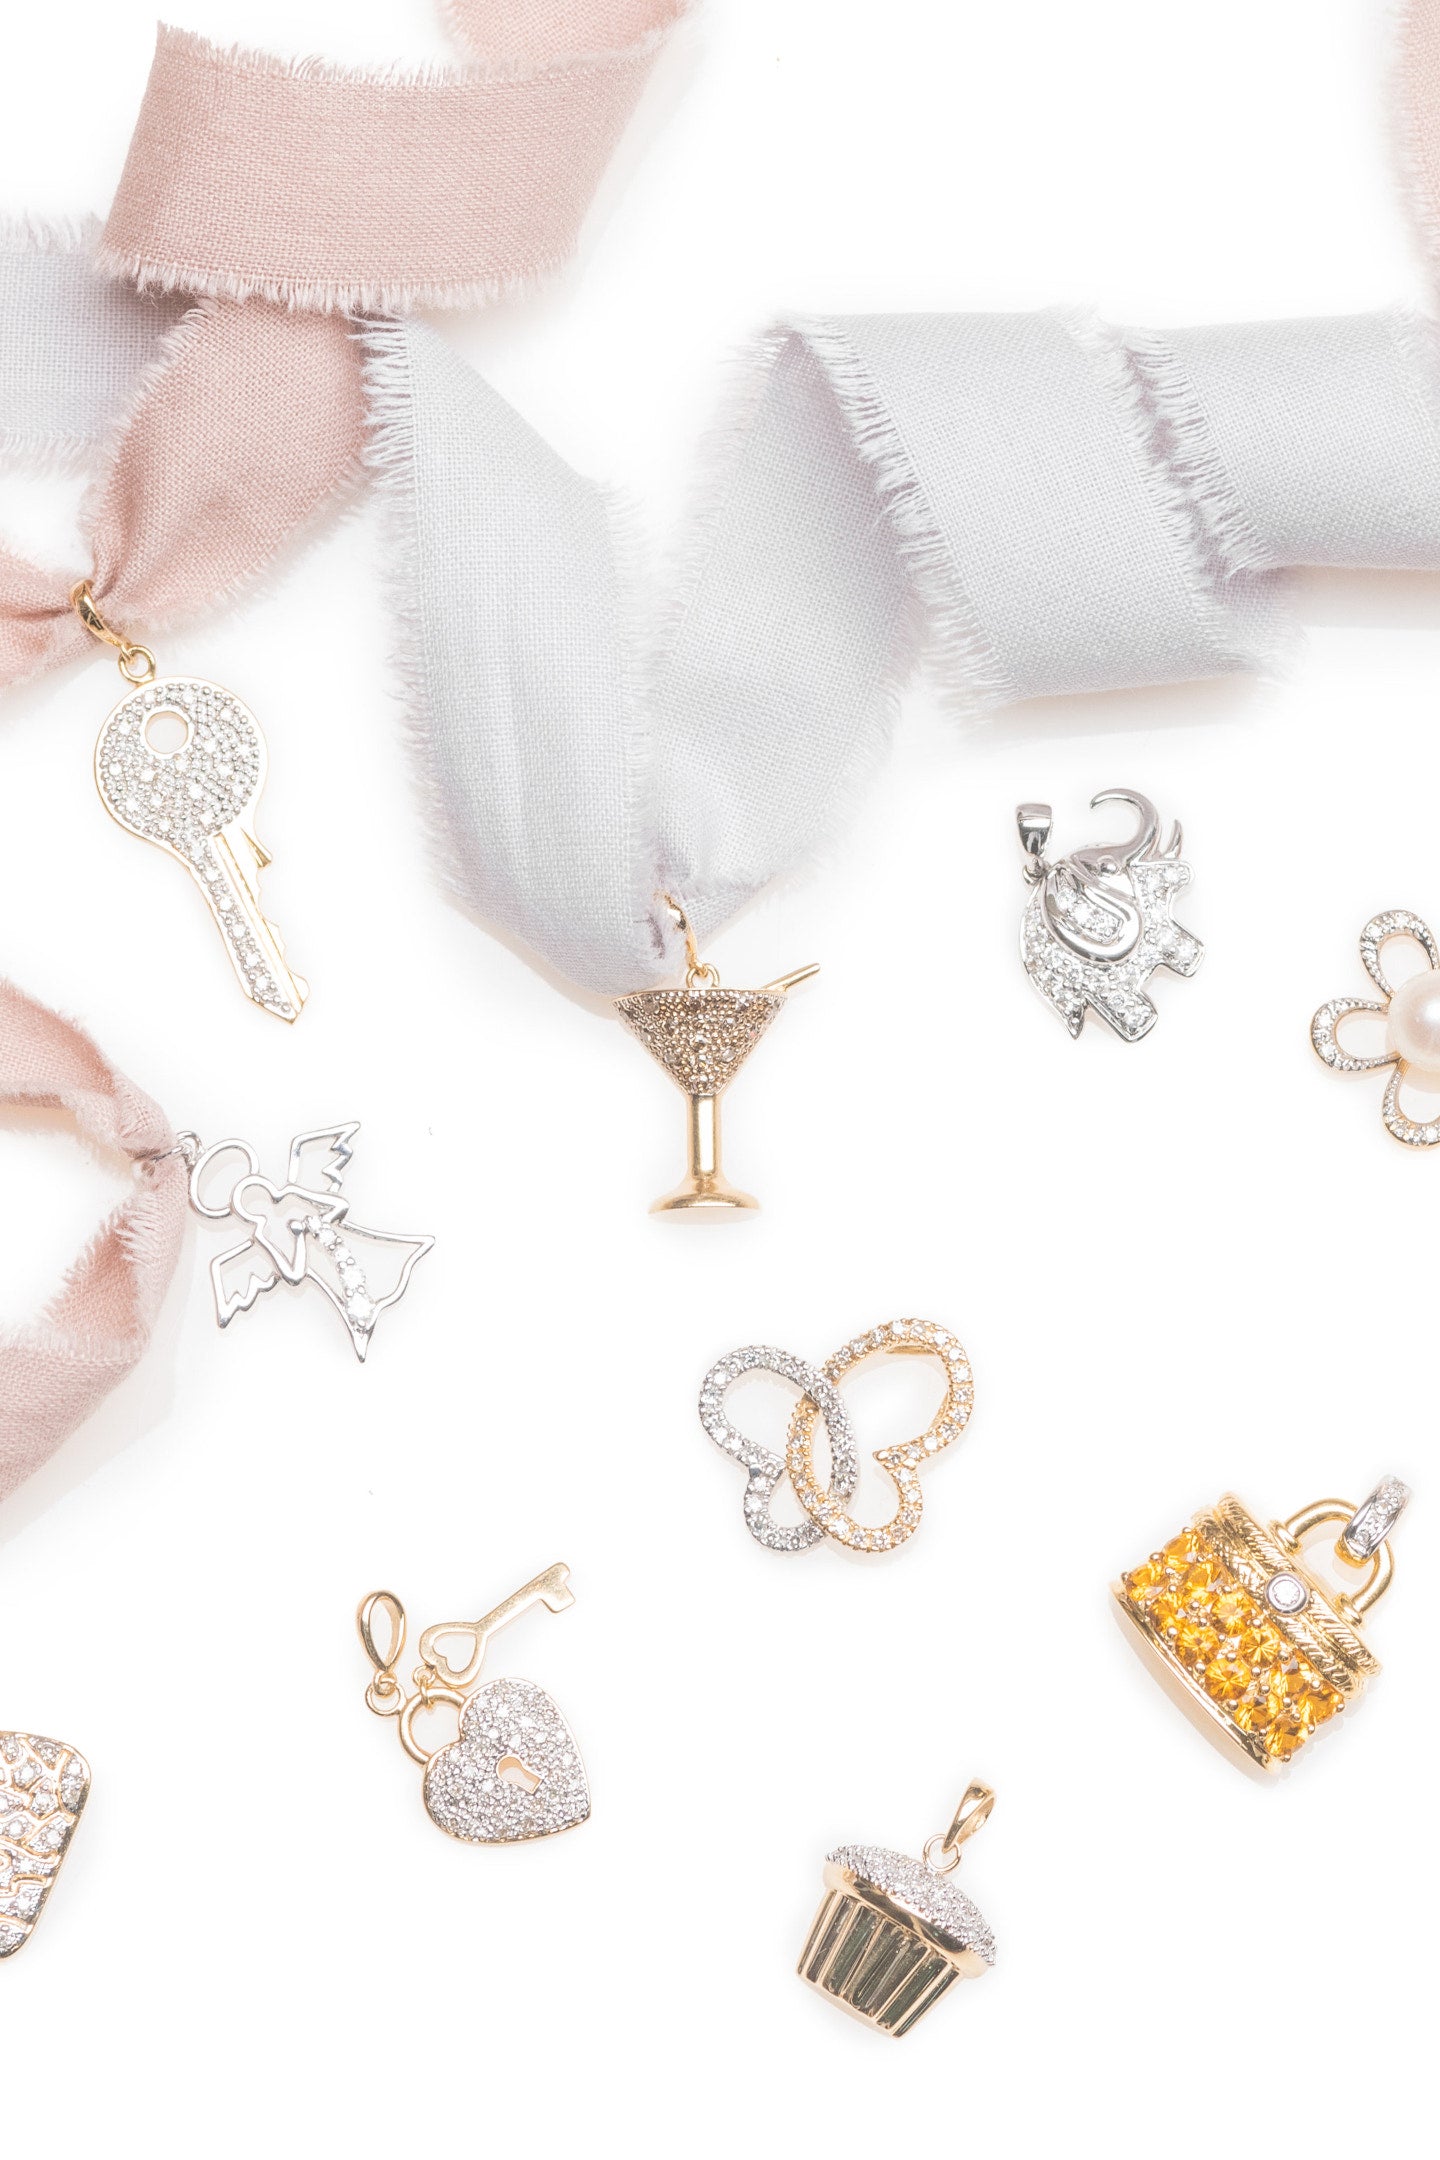 Letter E Bracelet – Erika Kaufman Jewelry